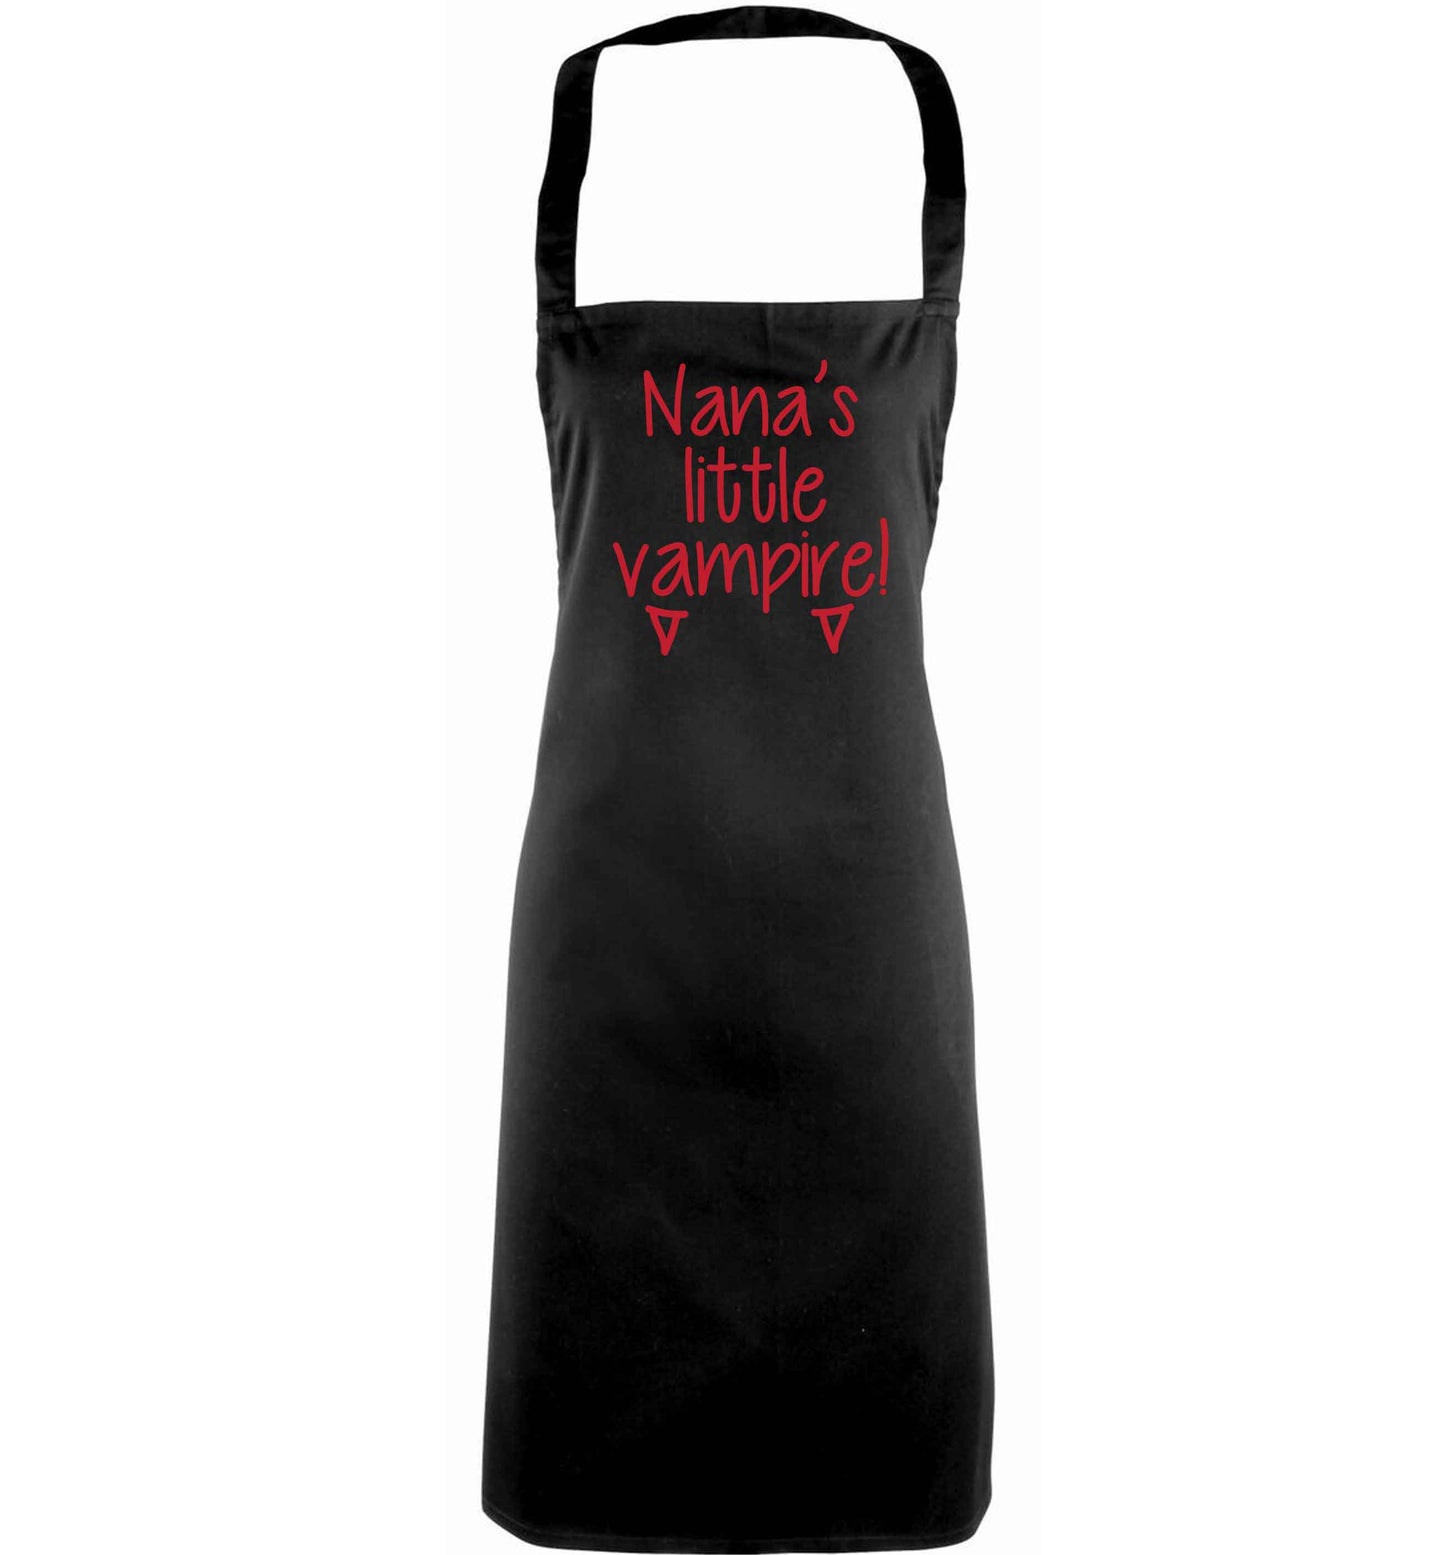 Nana's little vampire adults black apron